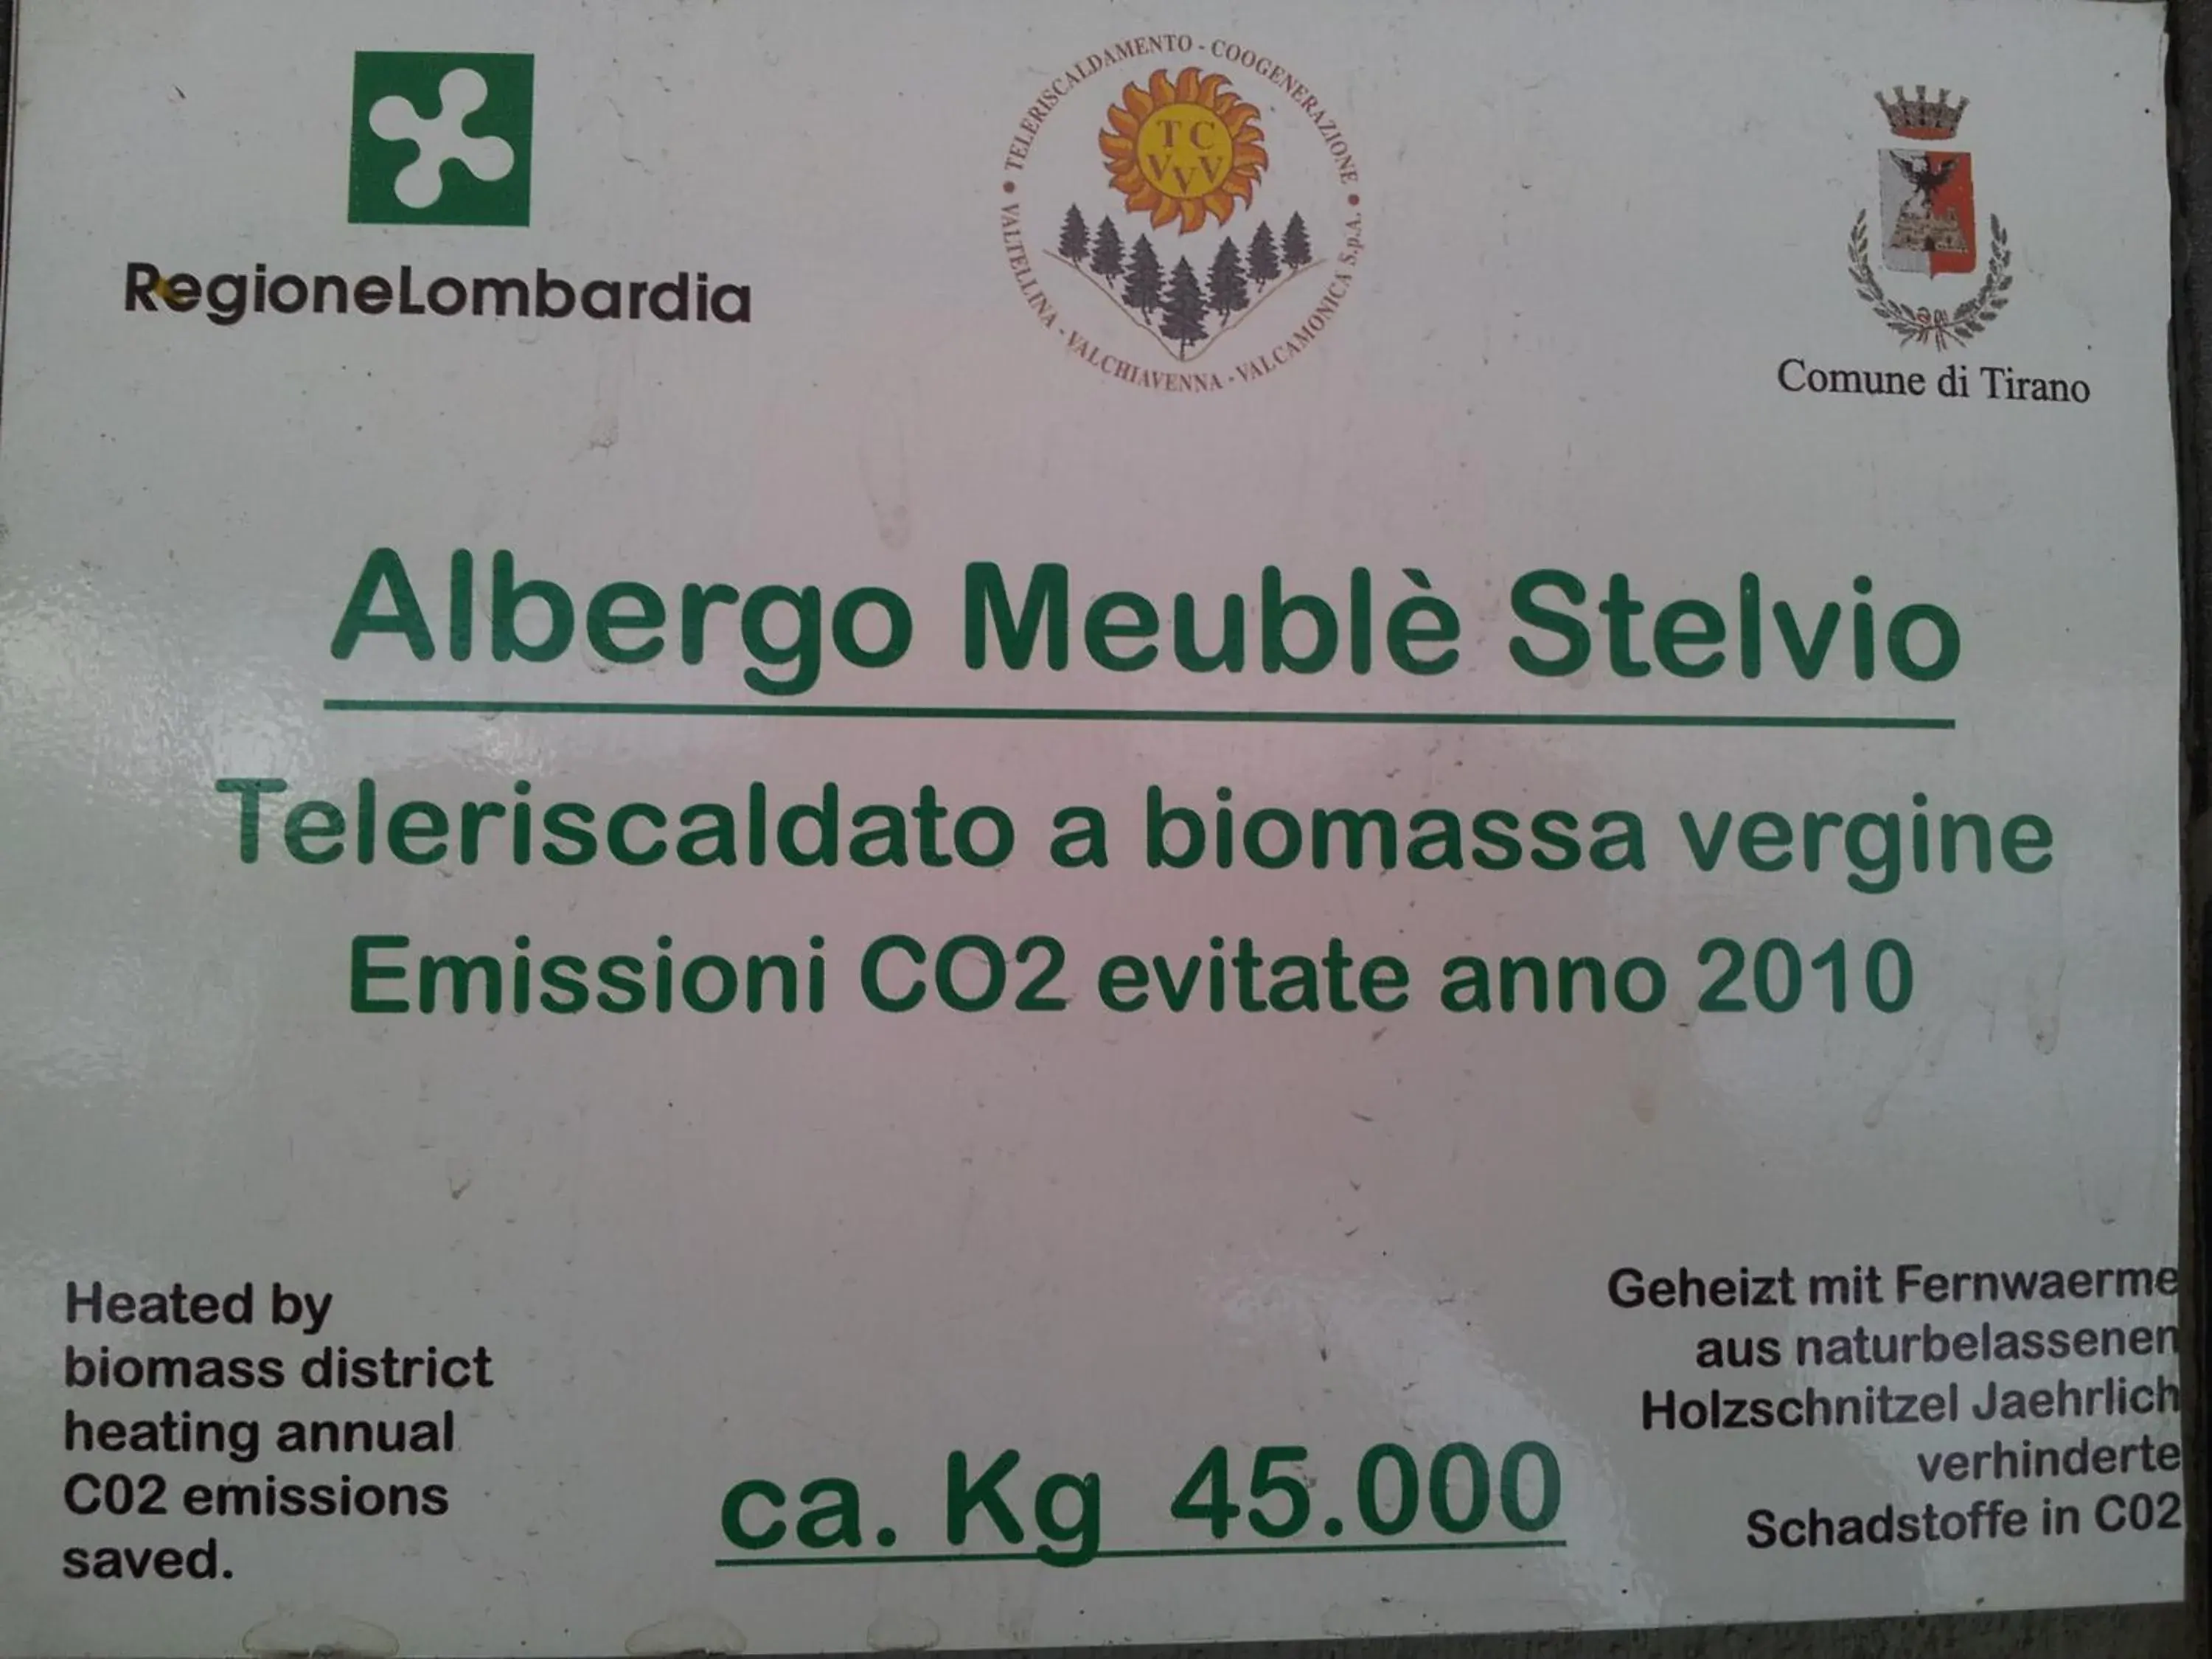 Certificate/Award in Albergo Meublè Stelvio